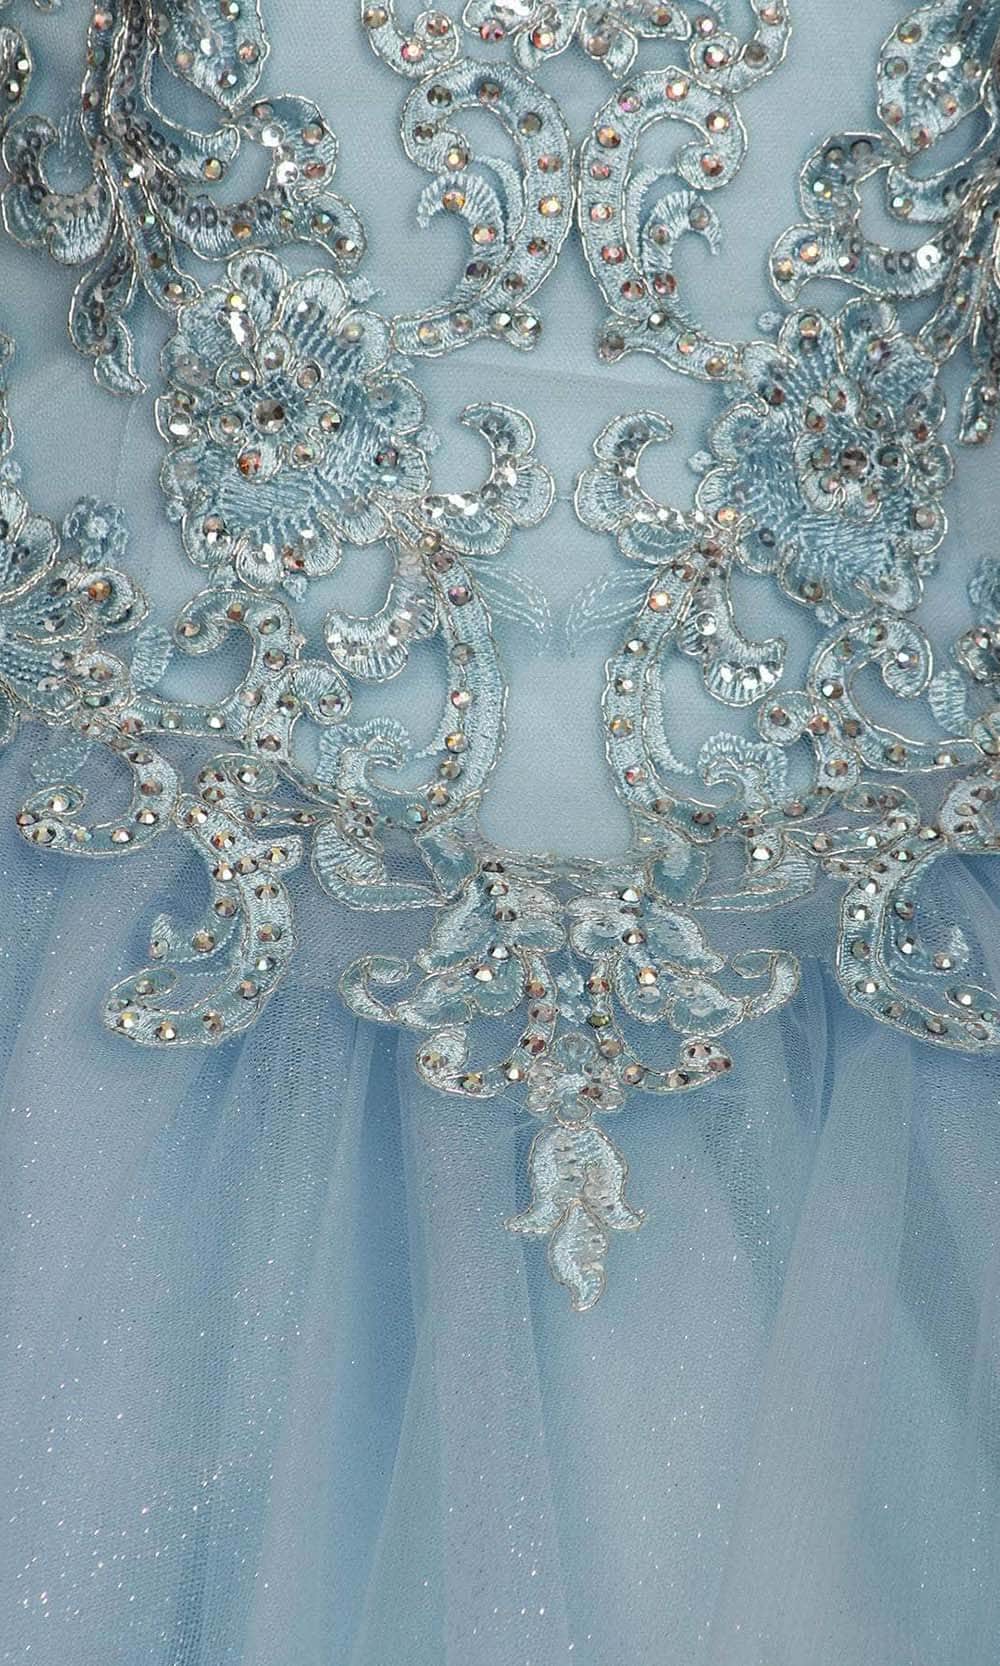 Eureka Fashion 9300 - Lace Appliqued Sweetheart Neck Ballgown Ball Gown